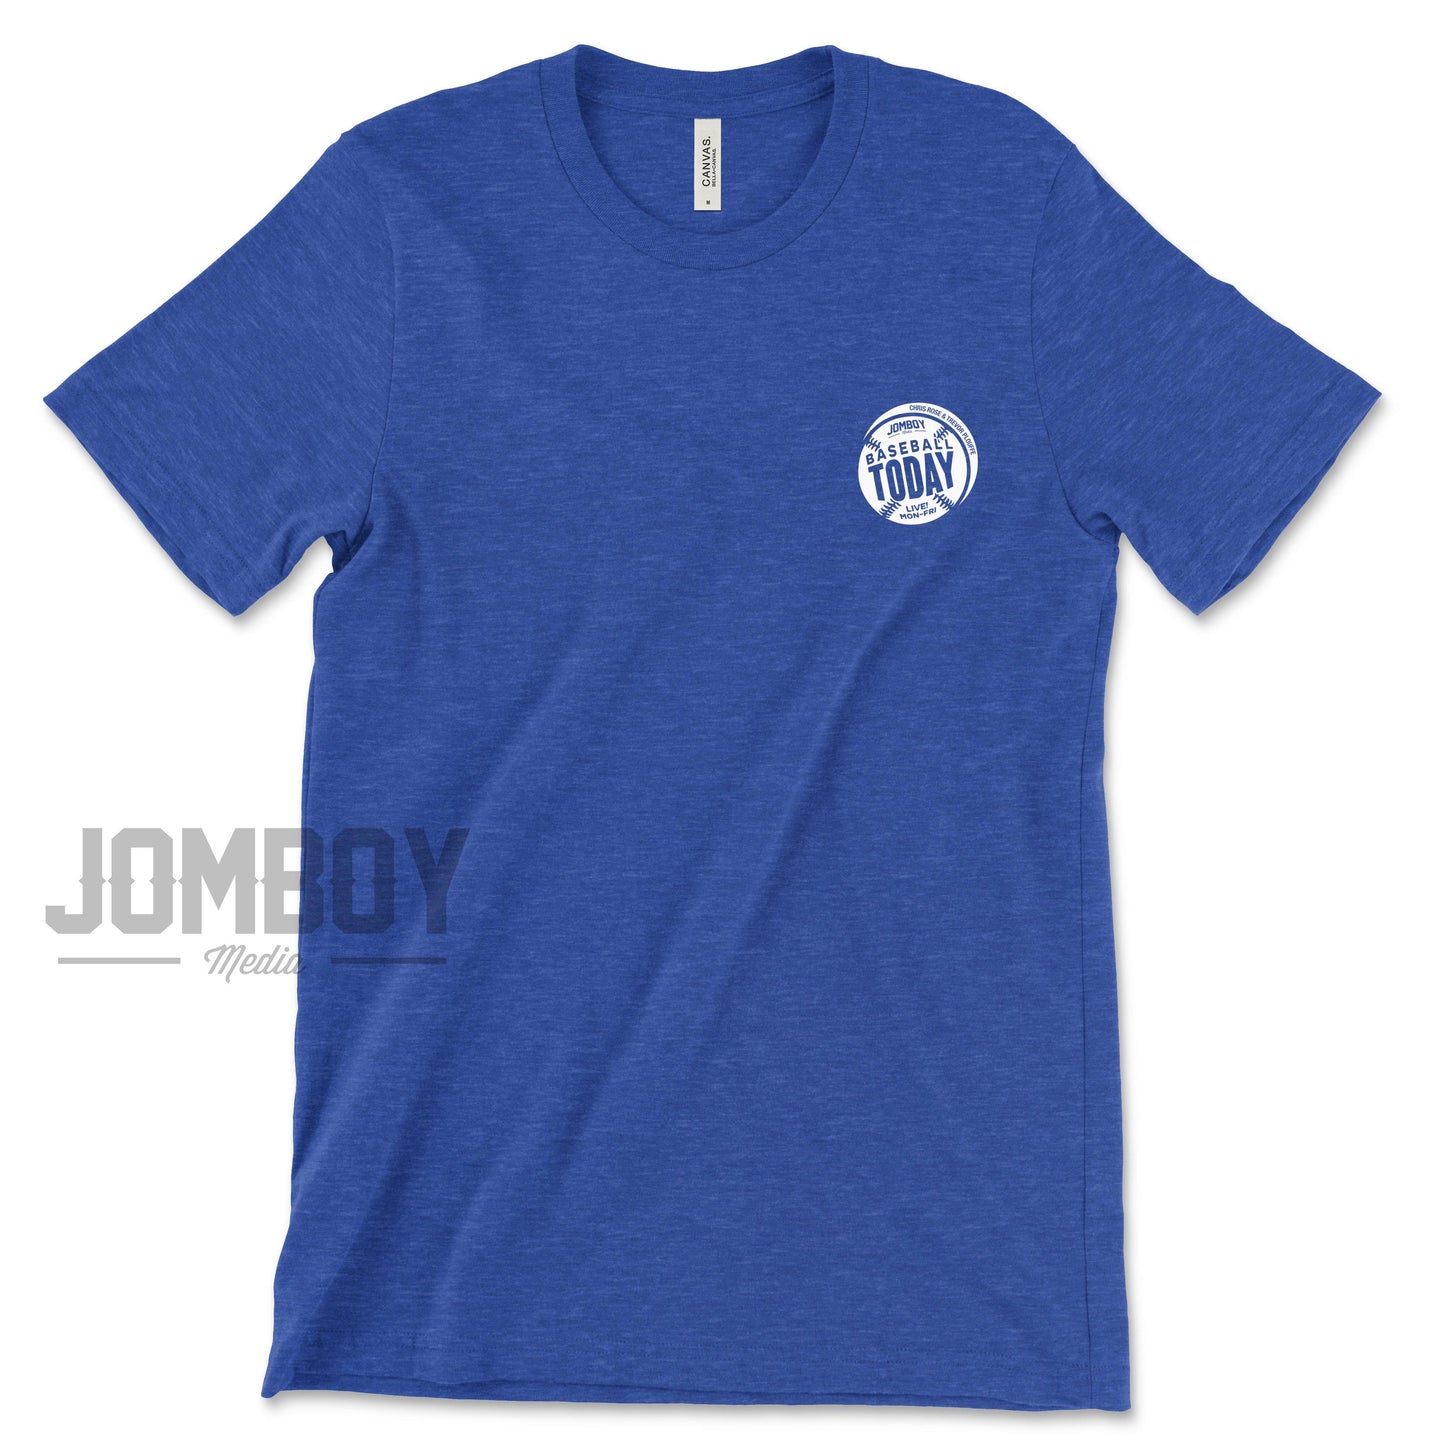 Baseball Today | T-Shirt 1 - Jomboy Media